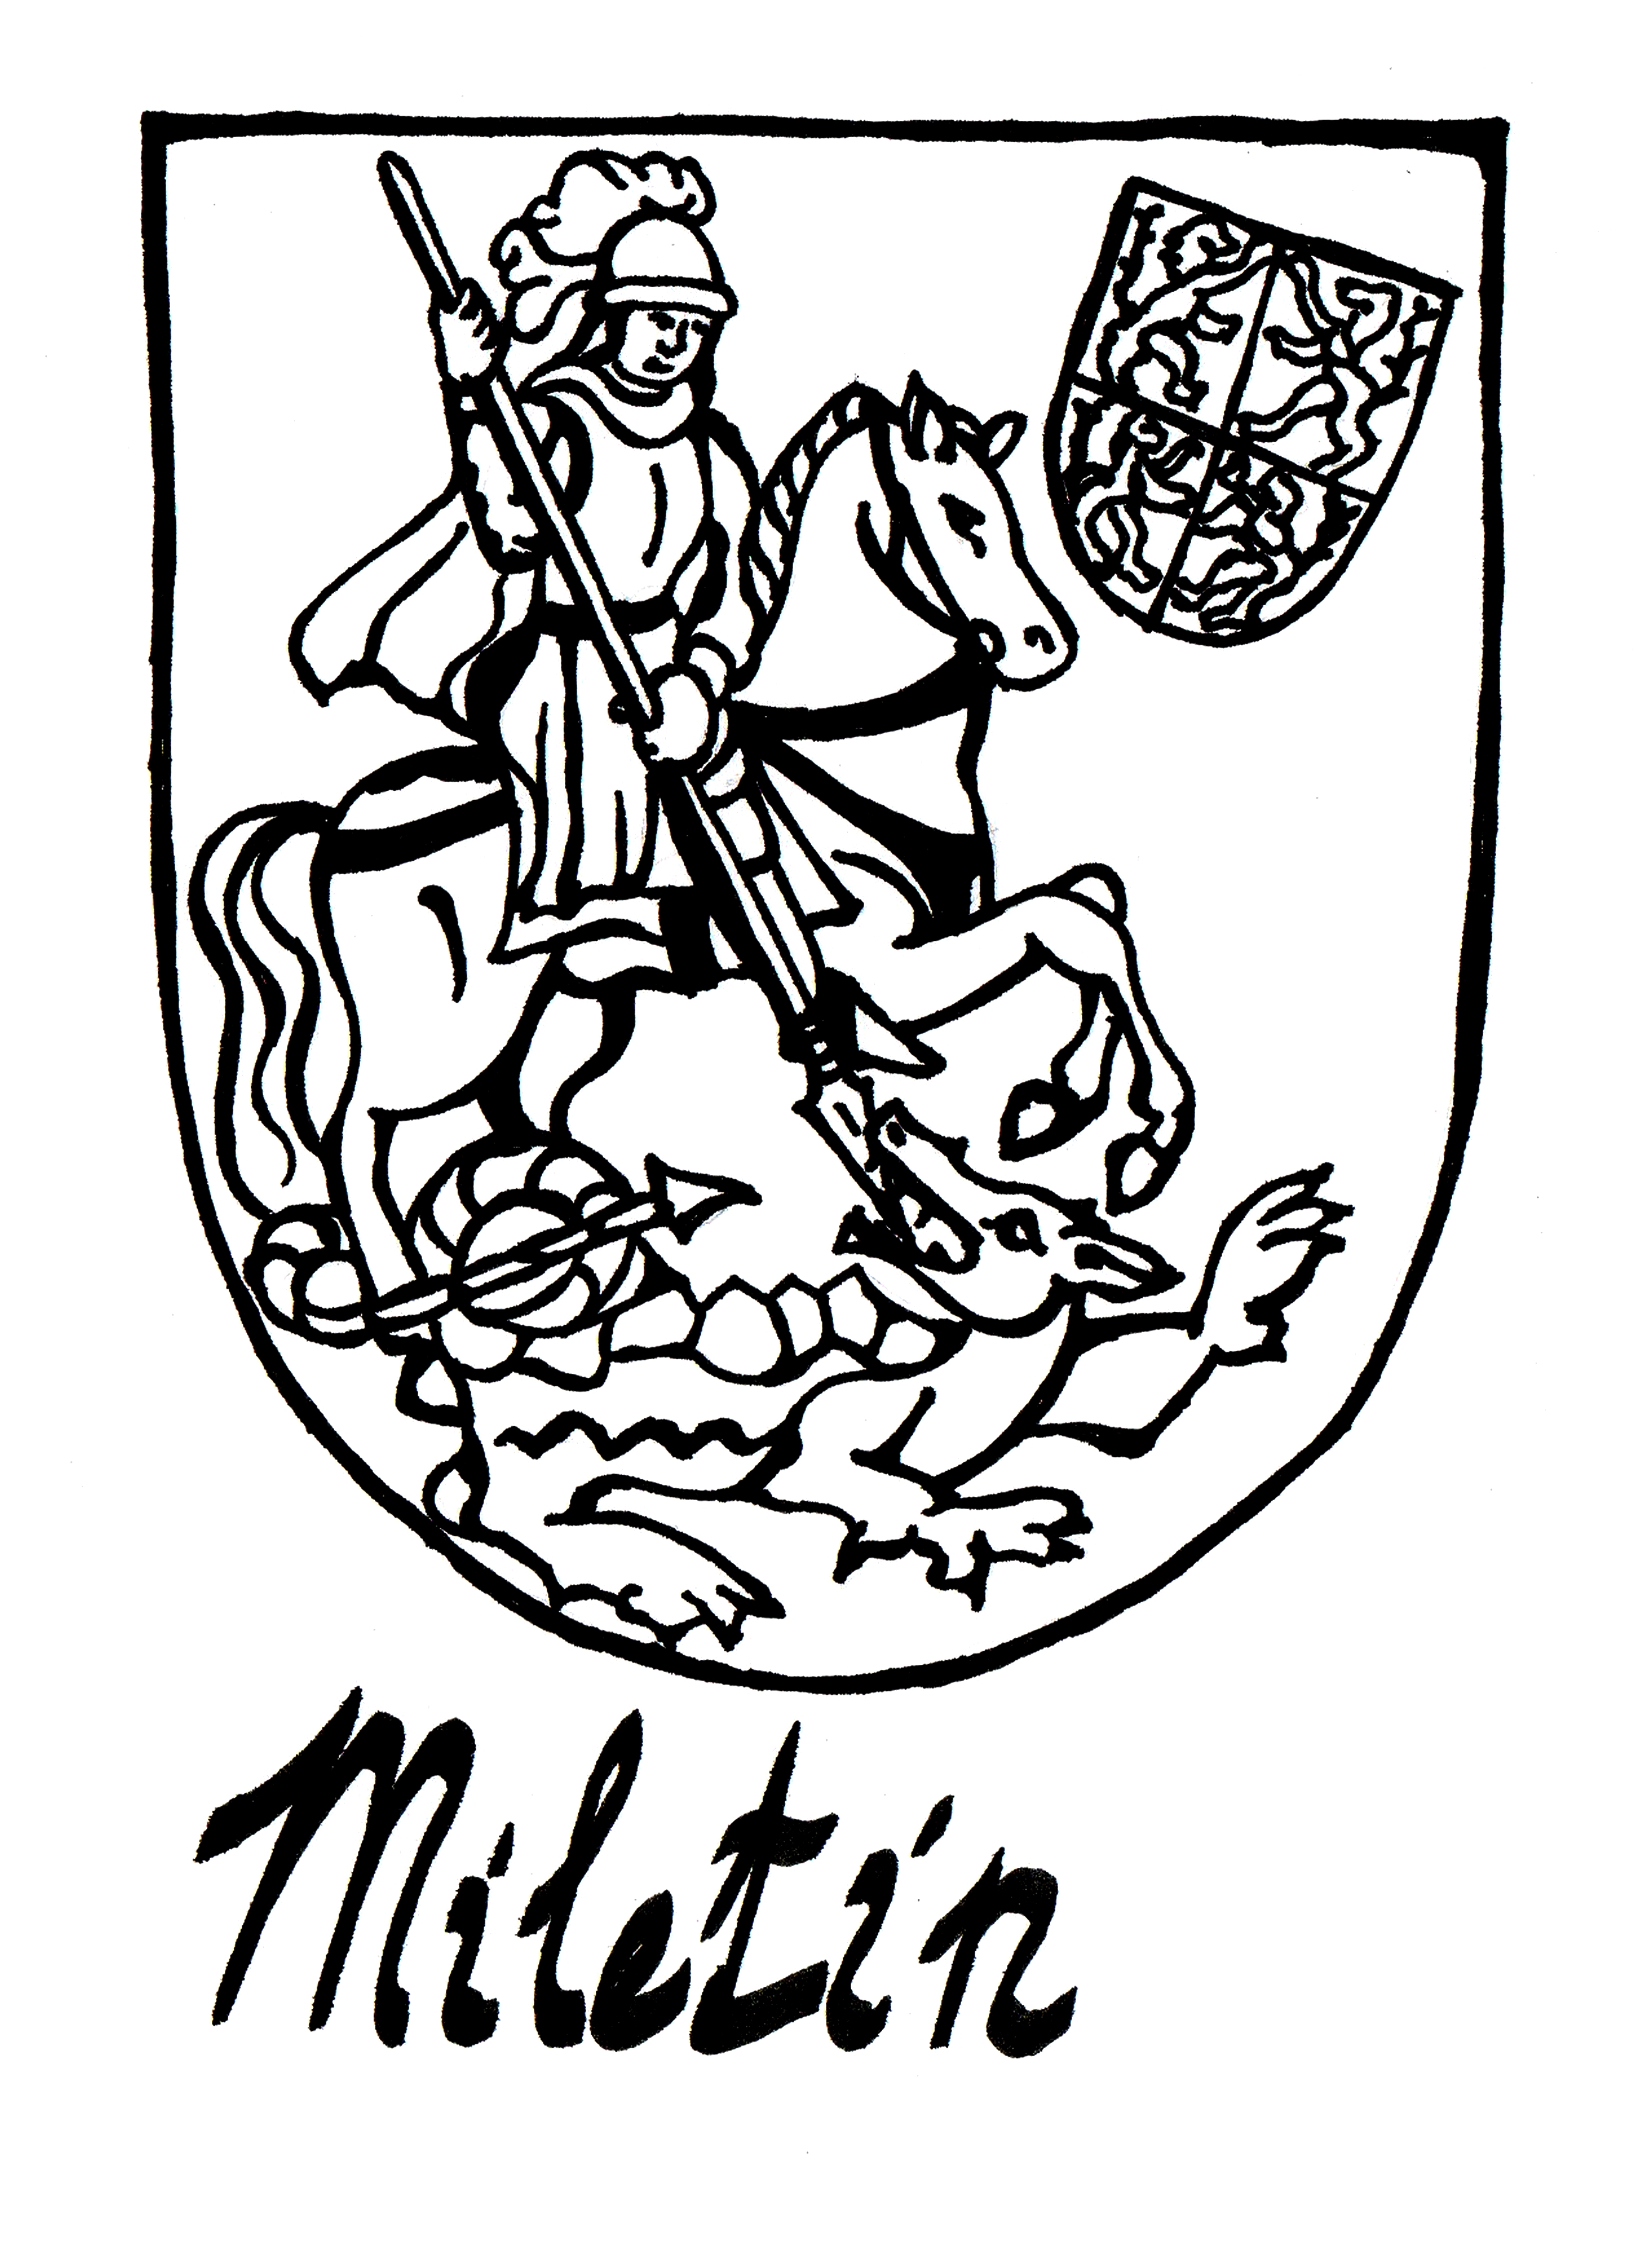 miletín1